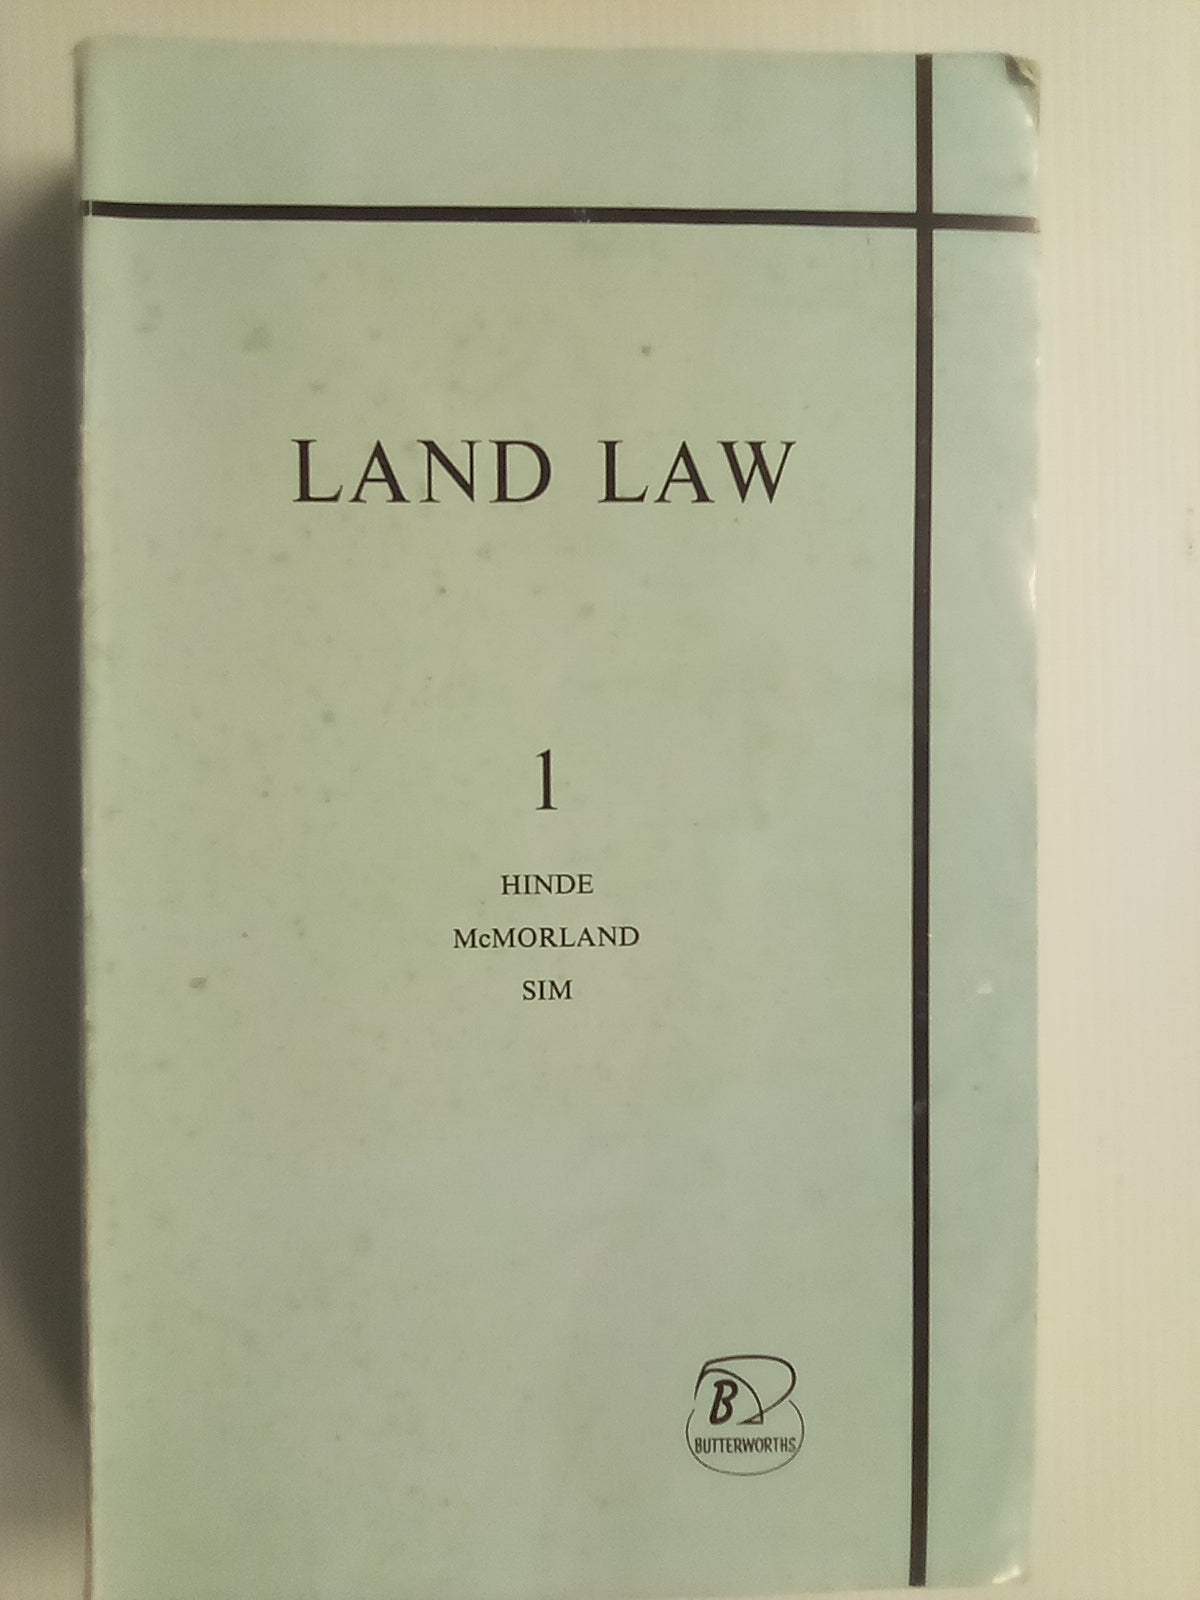 Land Law (1978) by Hinde, McMorland, & Sim